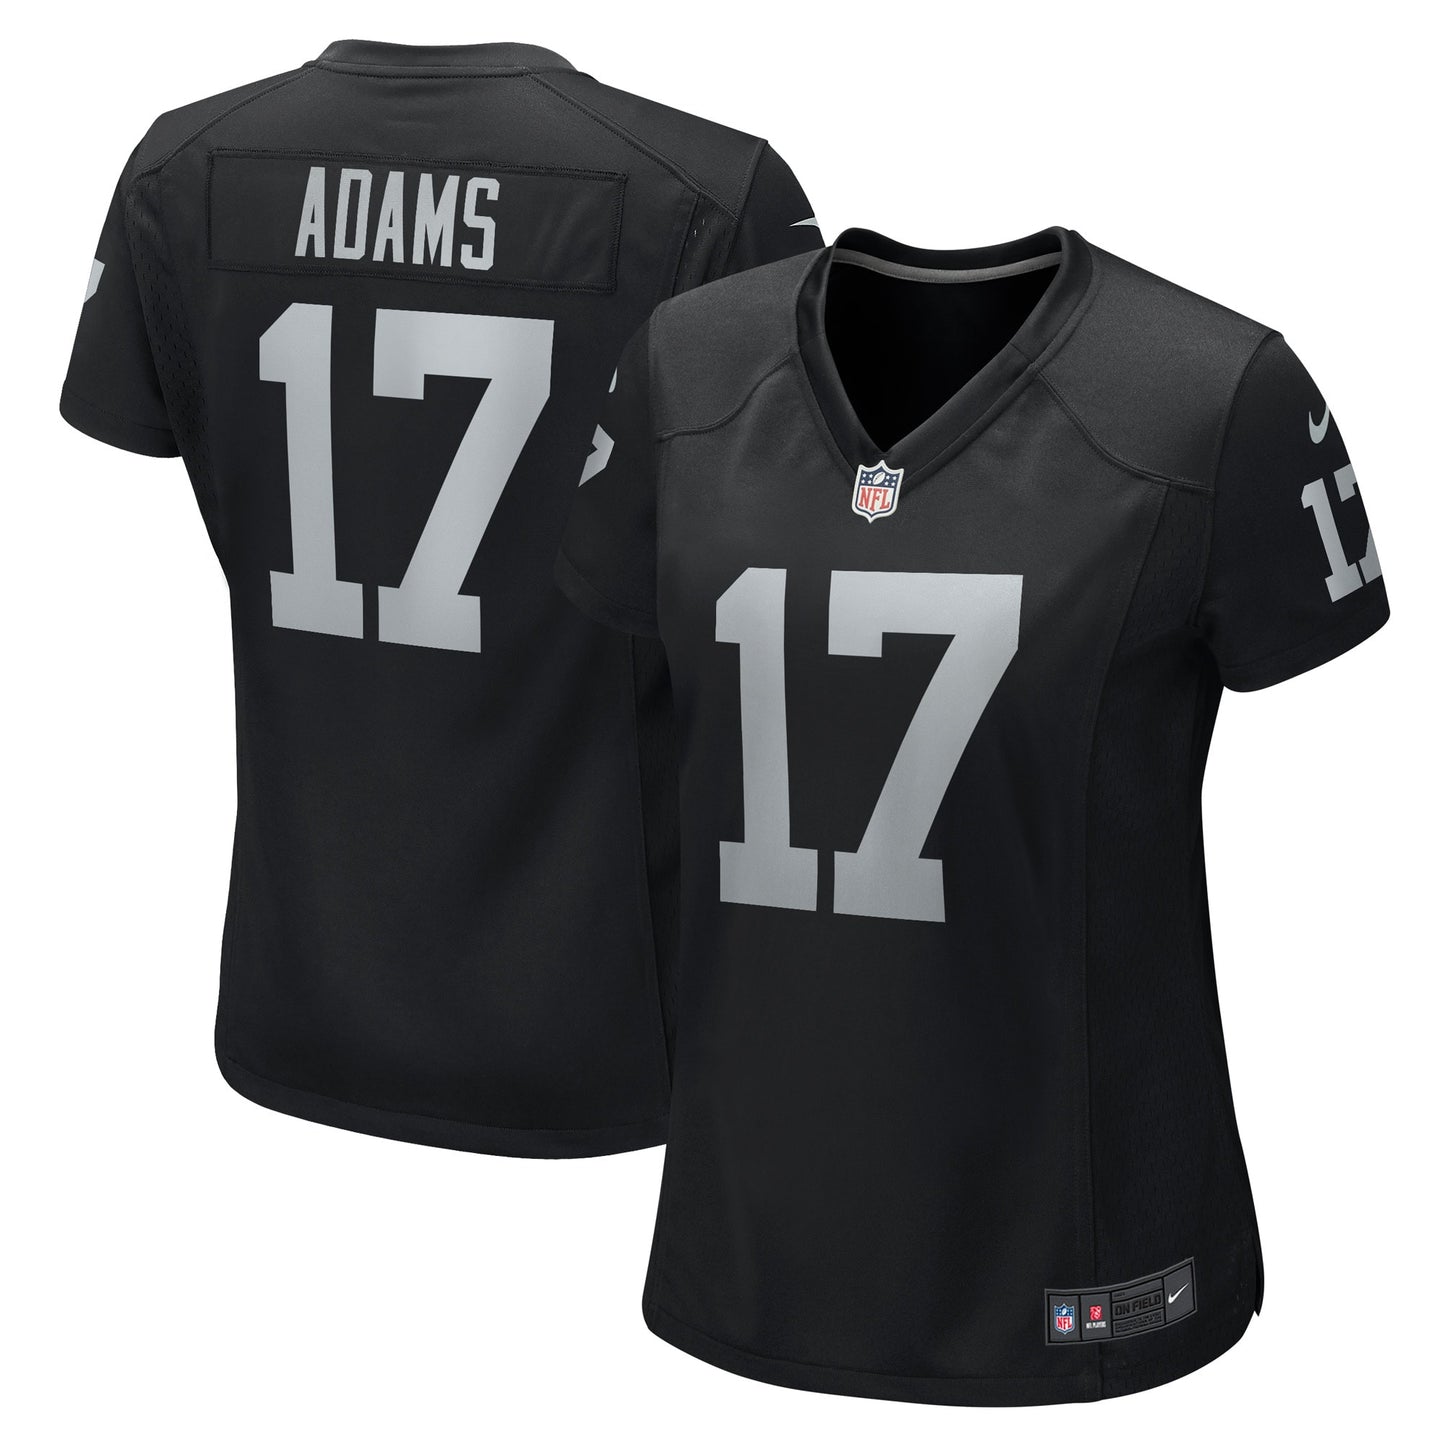 Davante Adams Las Vegas Raiders Nike Women's Player Jersey - Black